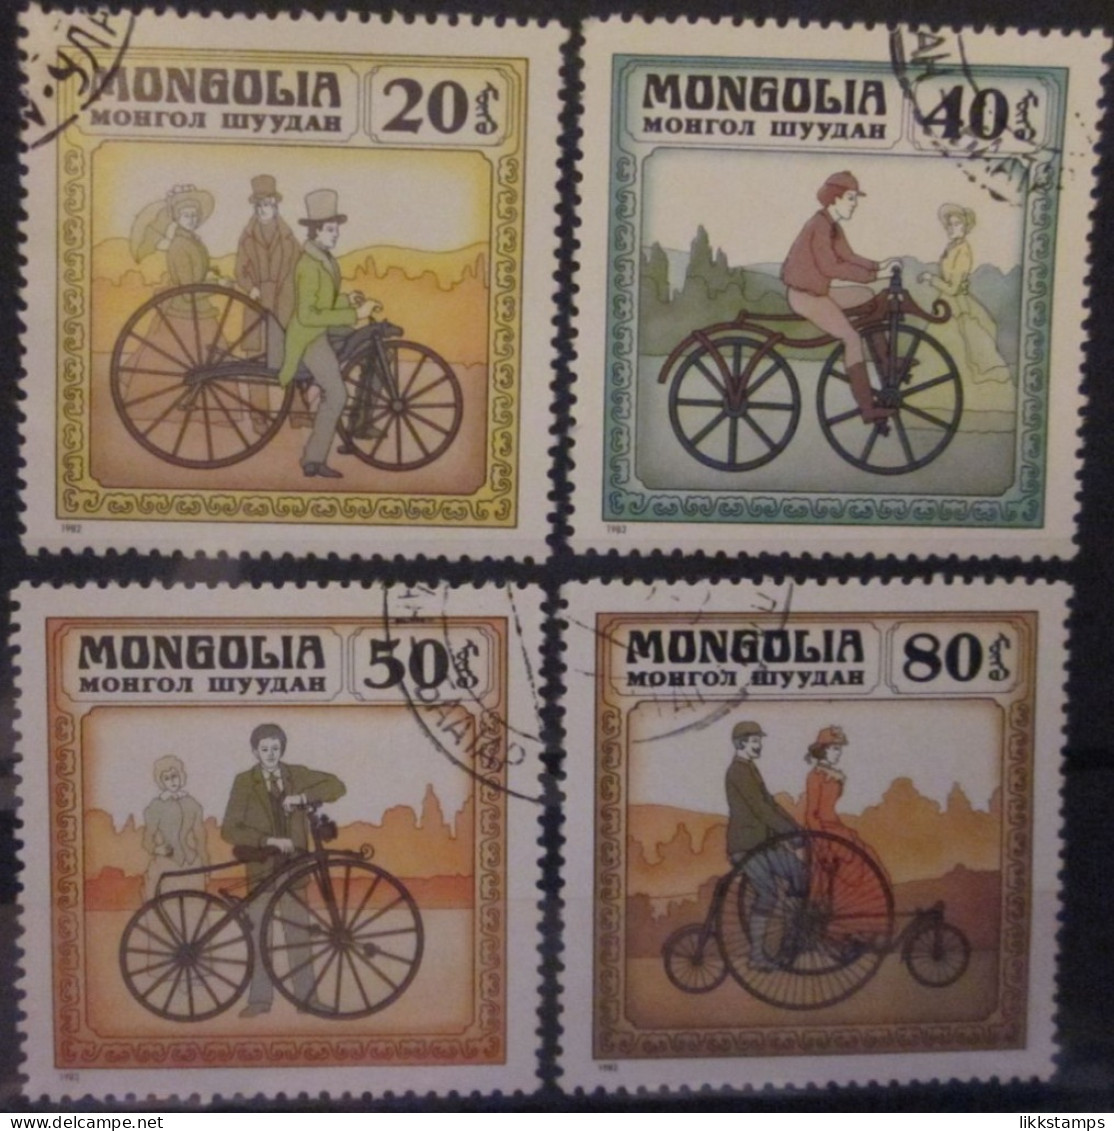 MONGOLIA ~ 1982 ~ S.G. NUMBERS 1432 - 1433 + 1435, ~ BICYCLES. ~ VFU #03480 - Mongolië